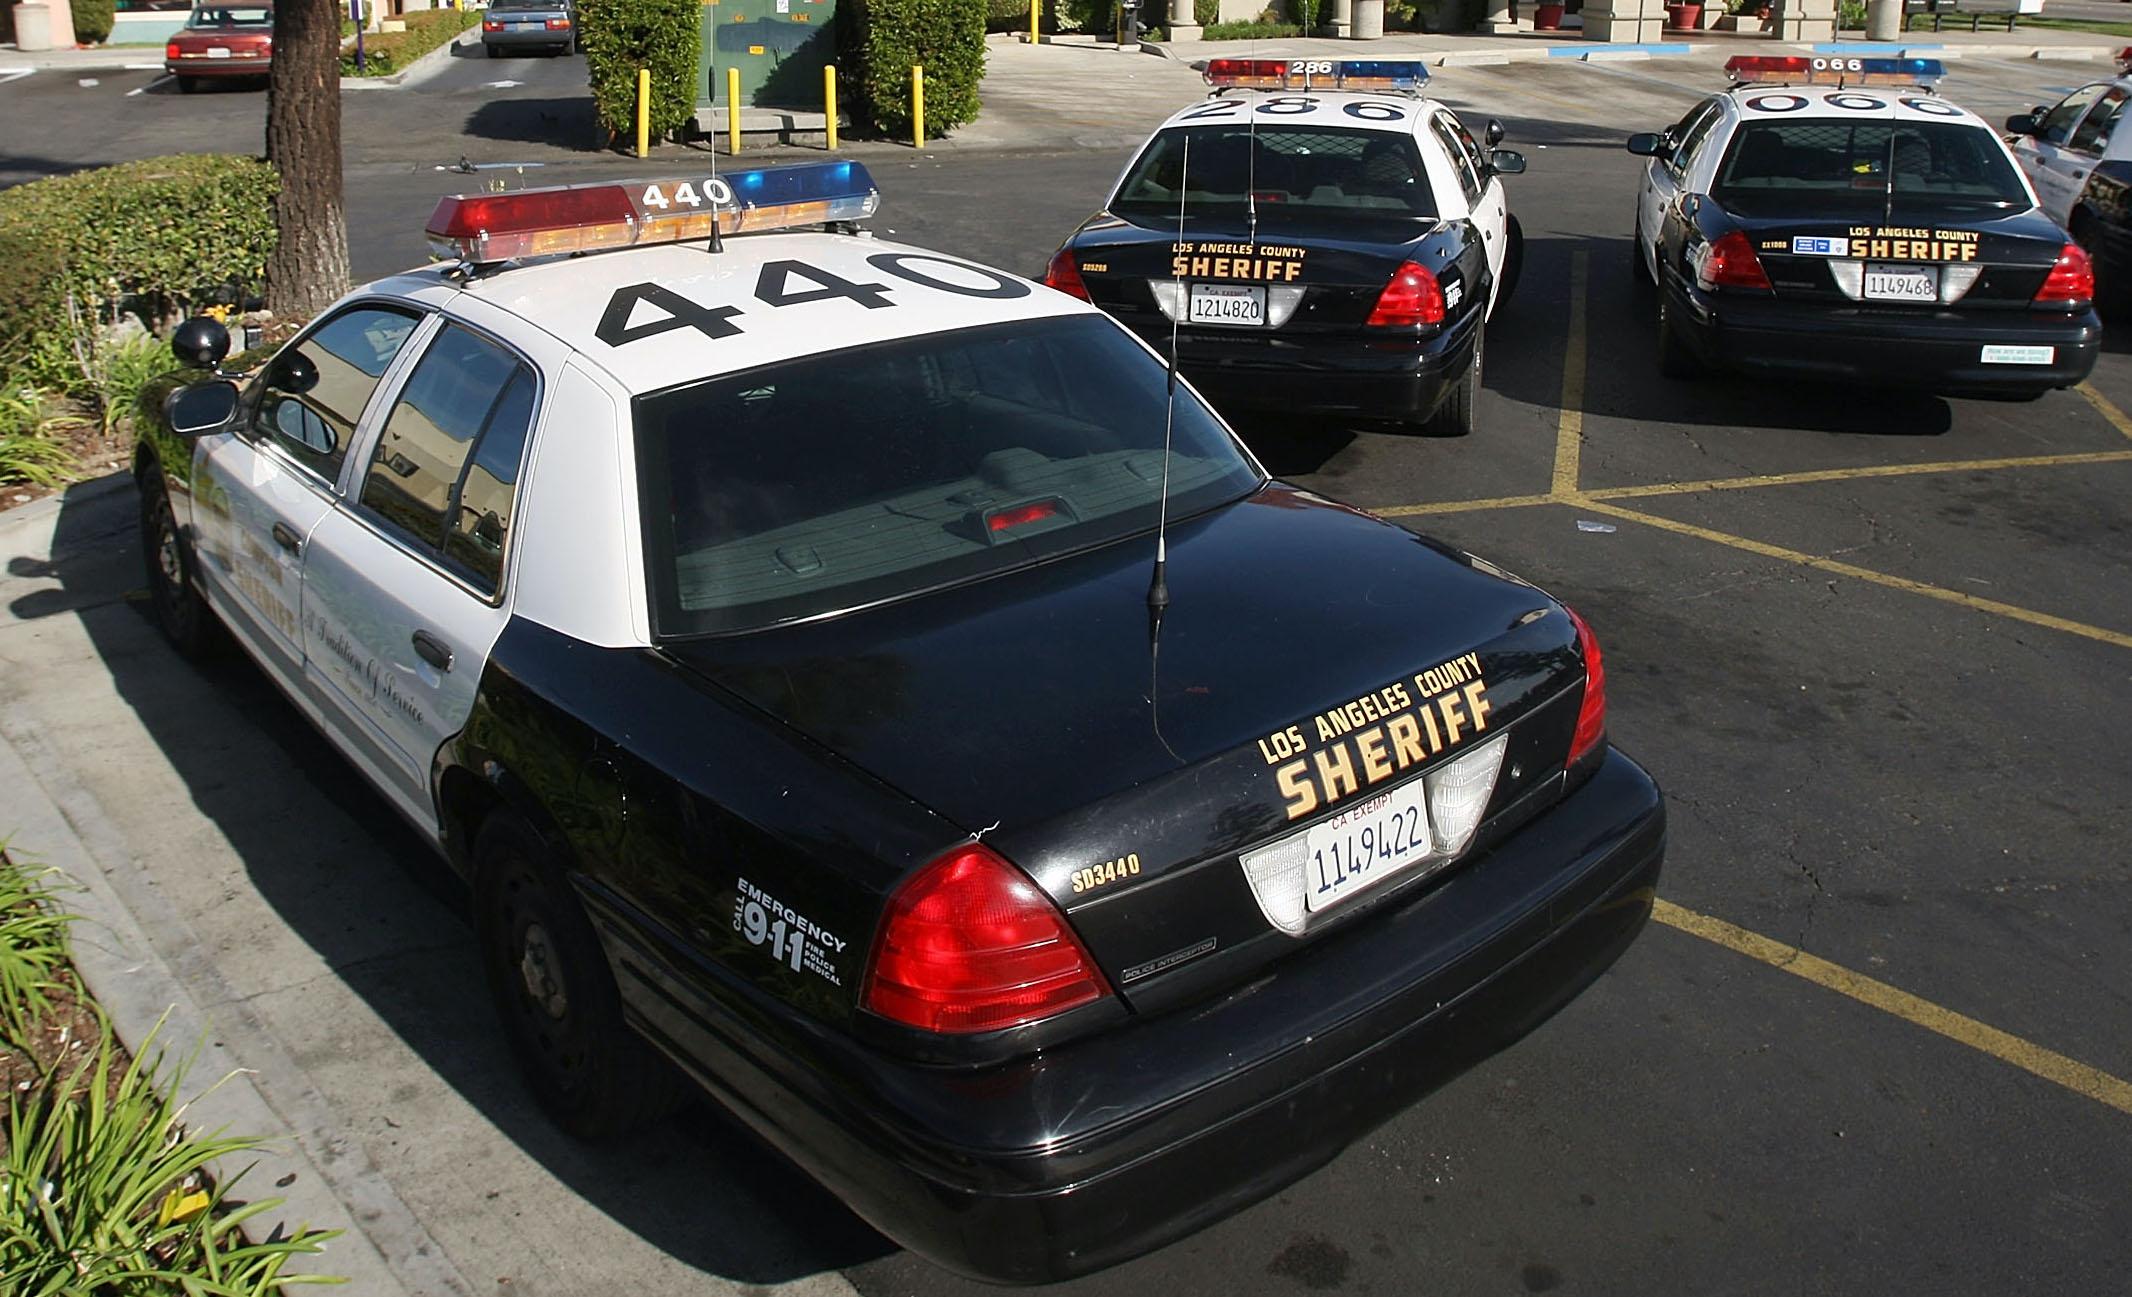 Los Angeles County Authorities Seek Help Identifying Corvette Thieves